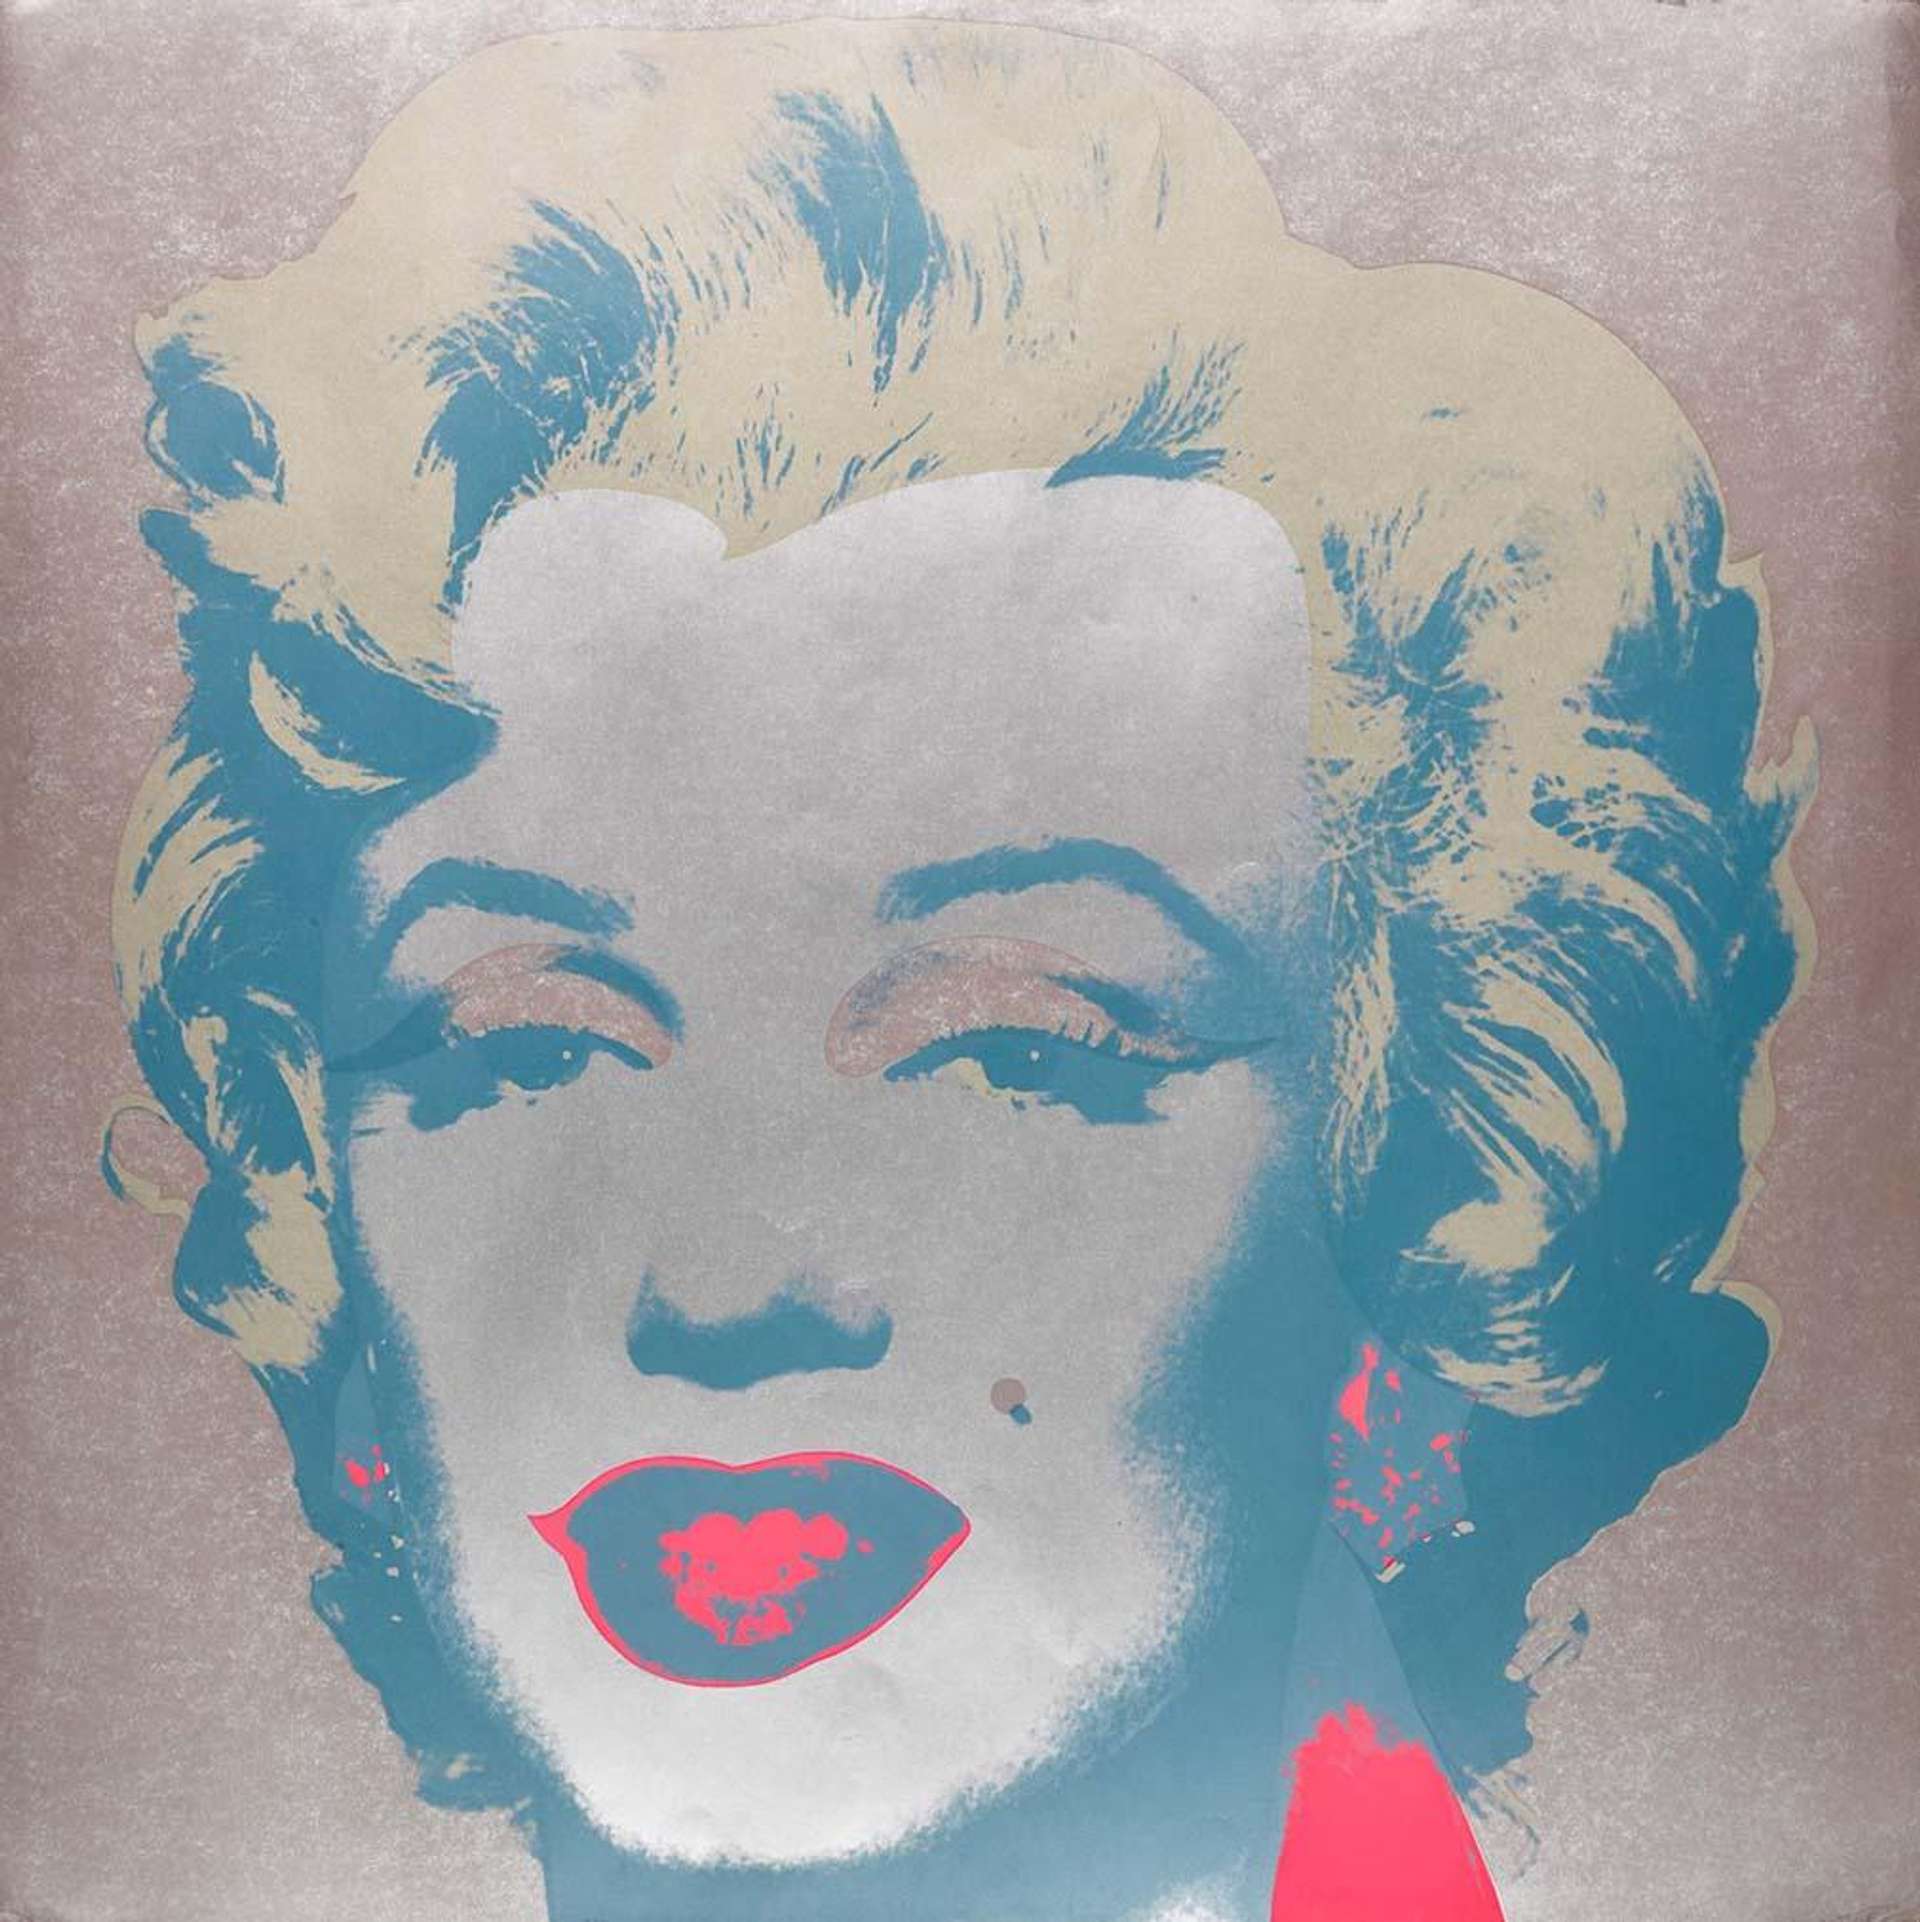 Andy Warhol’s Marilyn (F. & S. II.26). A Pop Art screen print of Marilyn Monroe.